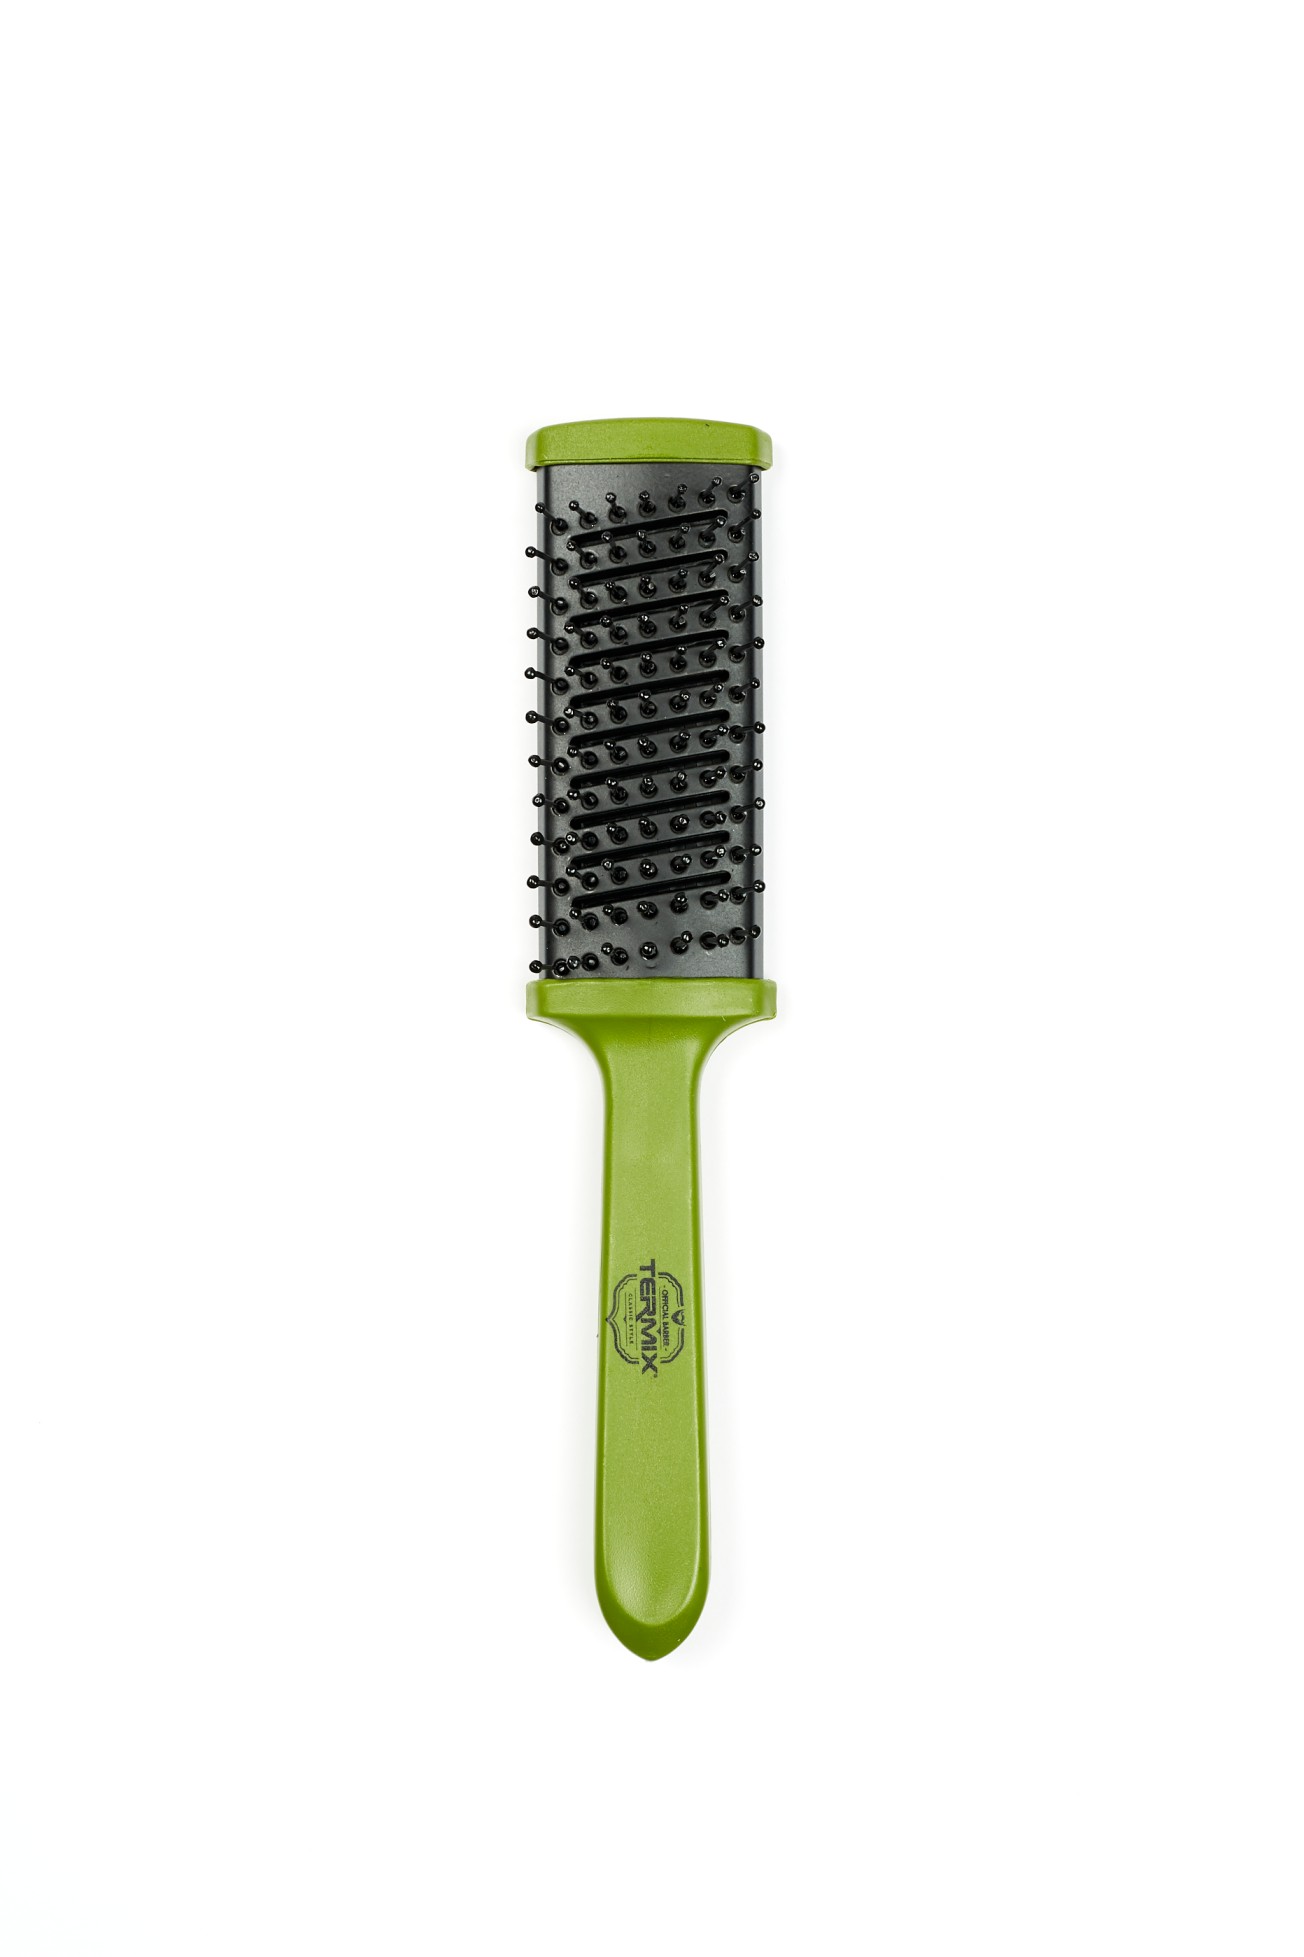 cepillo plano de la gama barber de termix